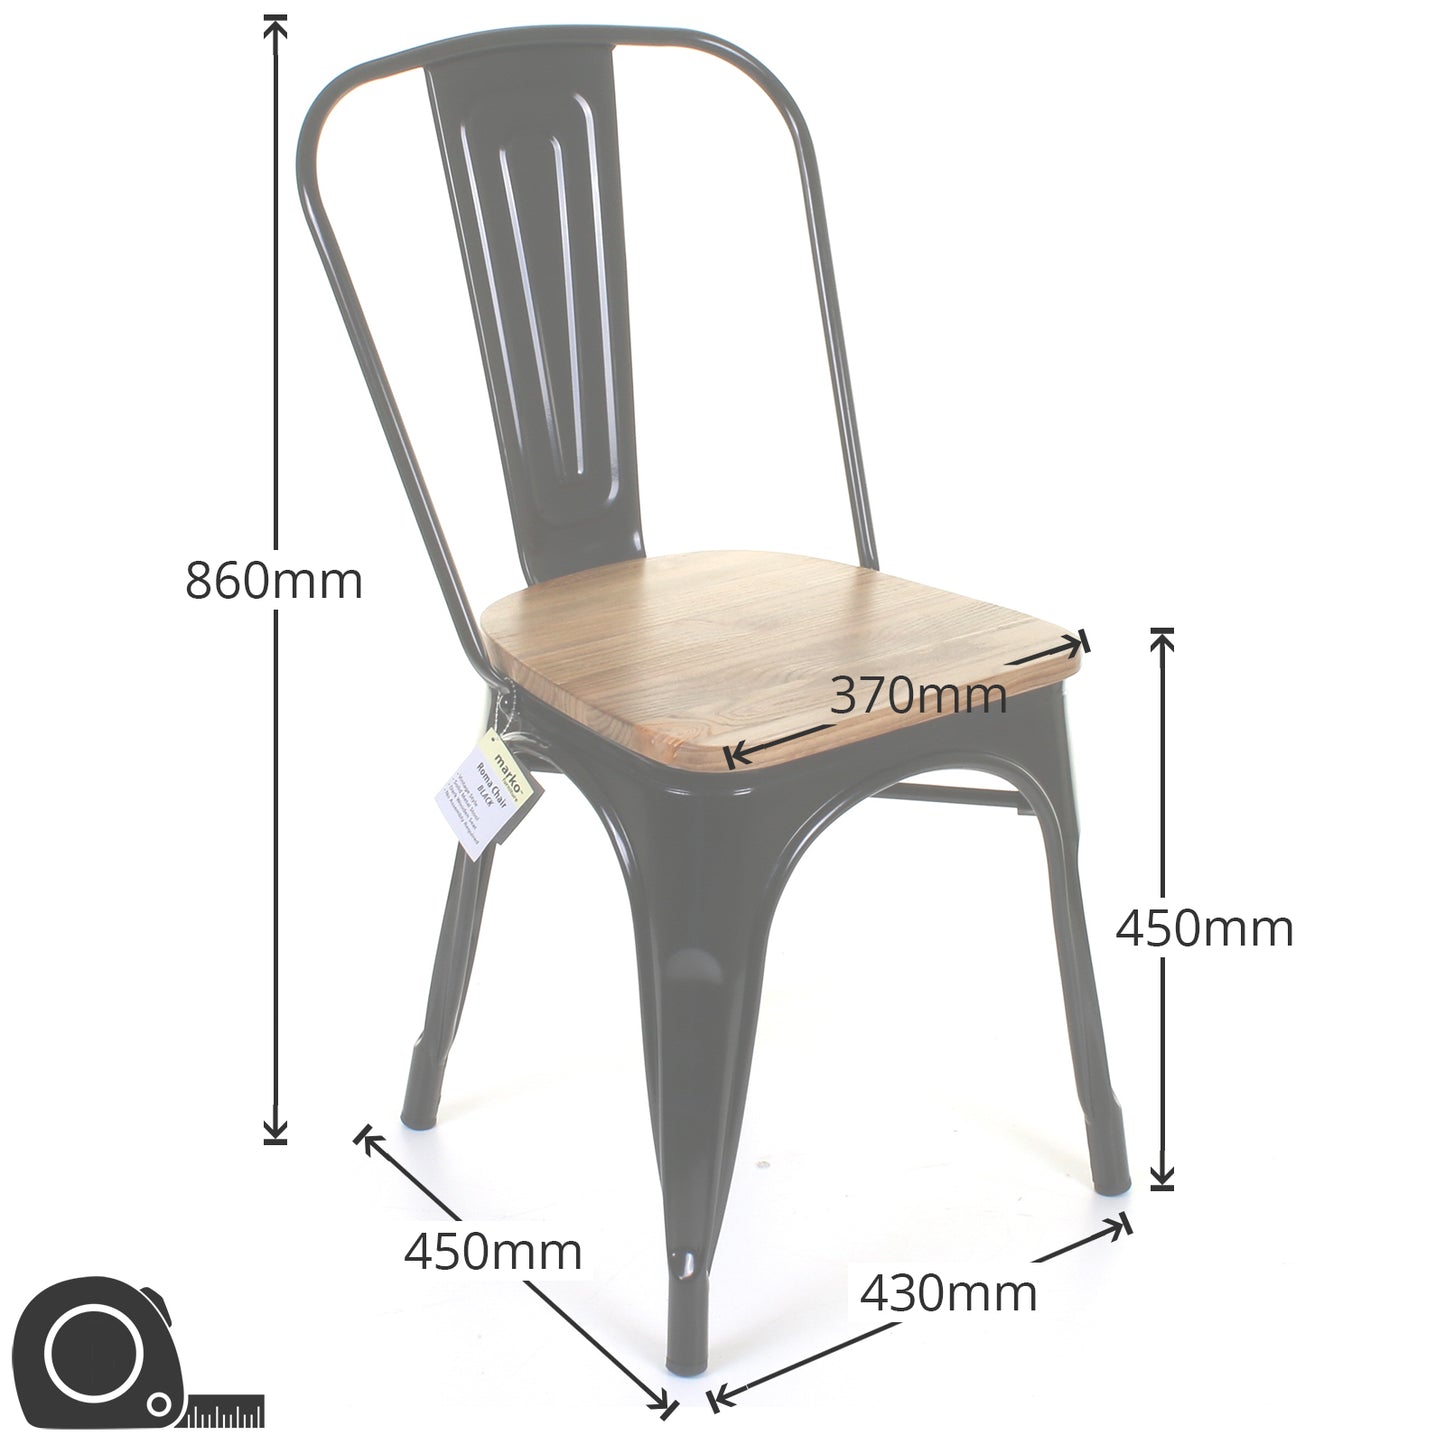 5PC Enna Table & Palermo Chair Set - Black